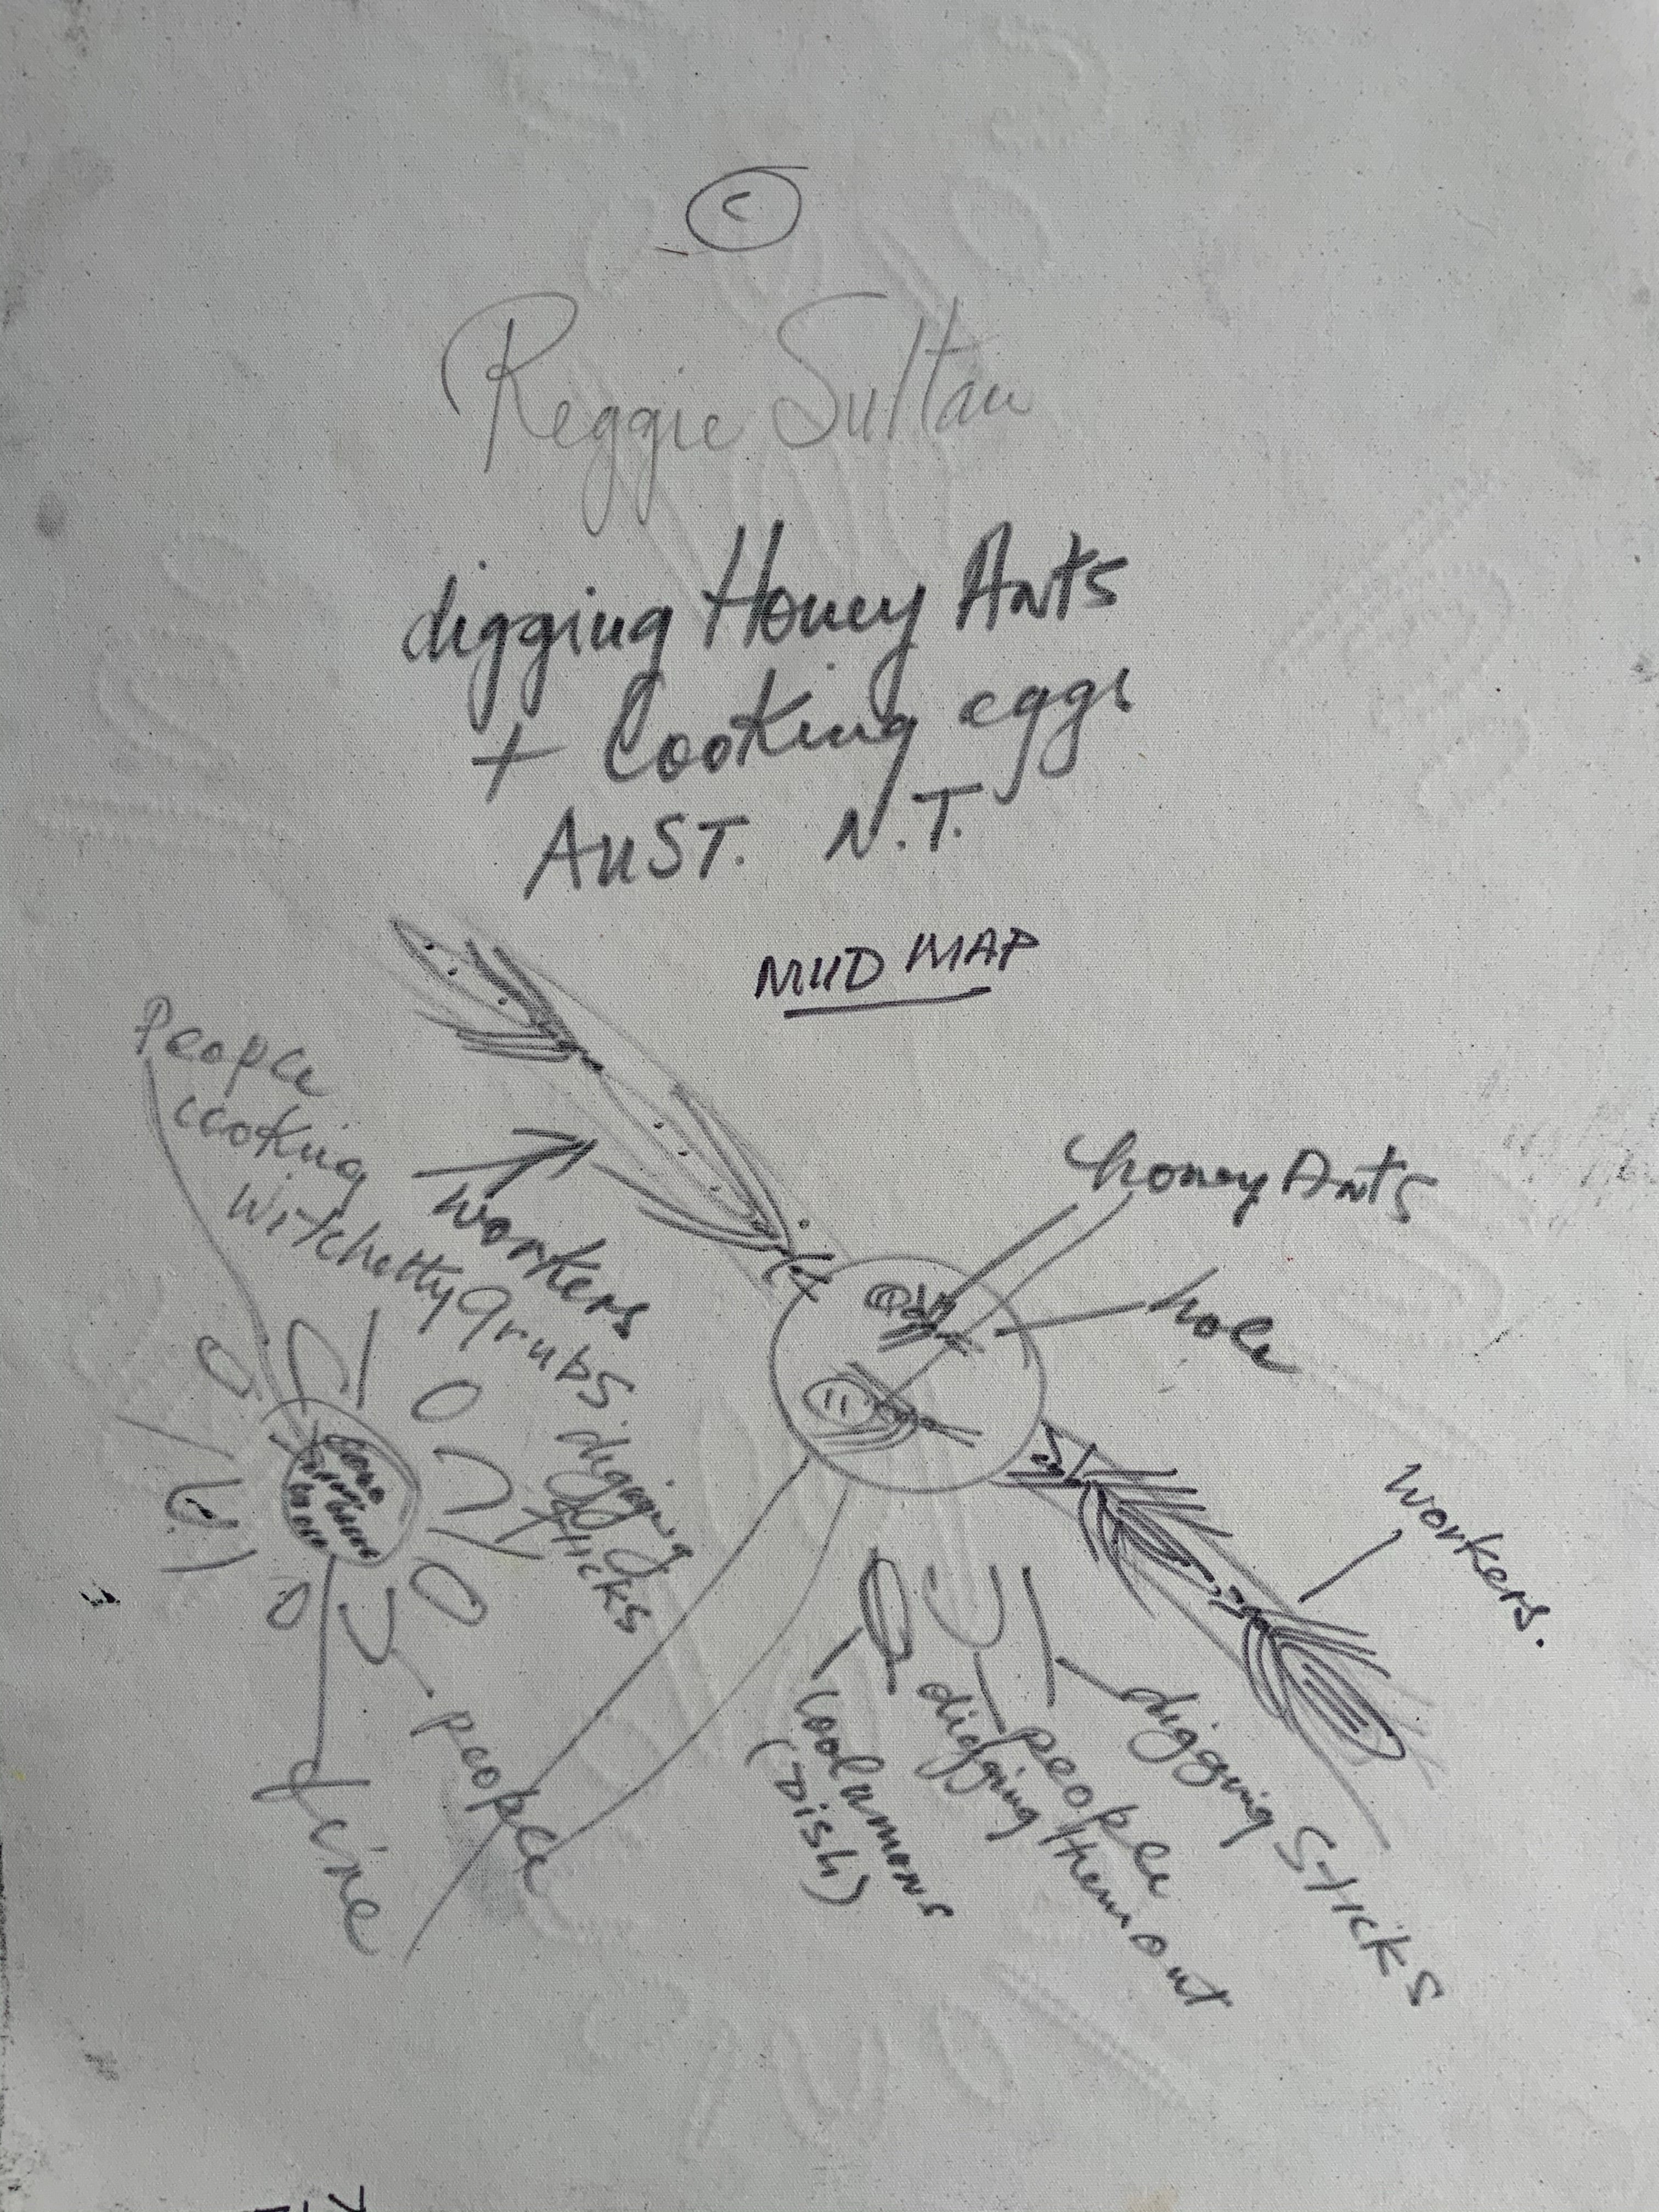 Reggie Sultan - 68x101cm - Looking for Honey Ants  .66-3